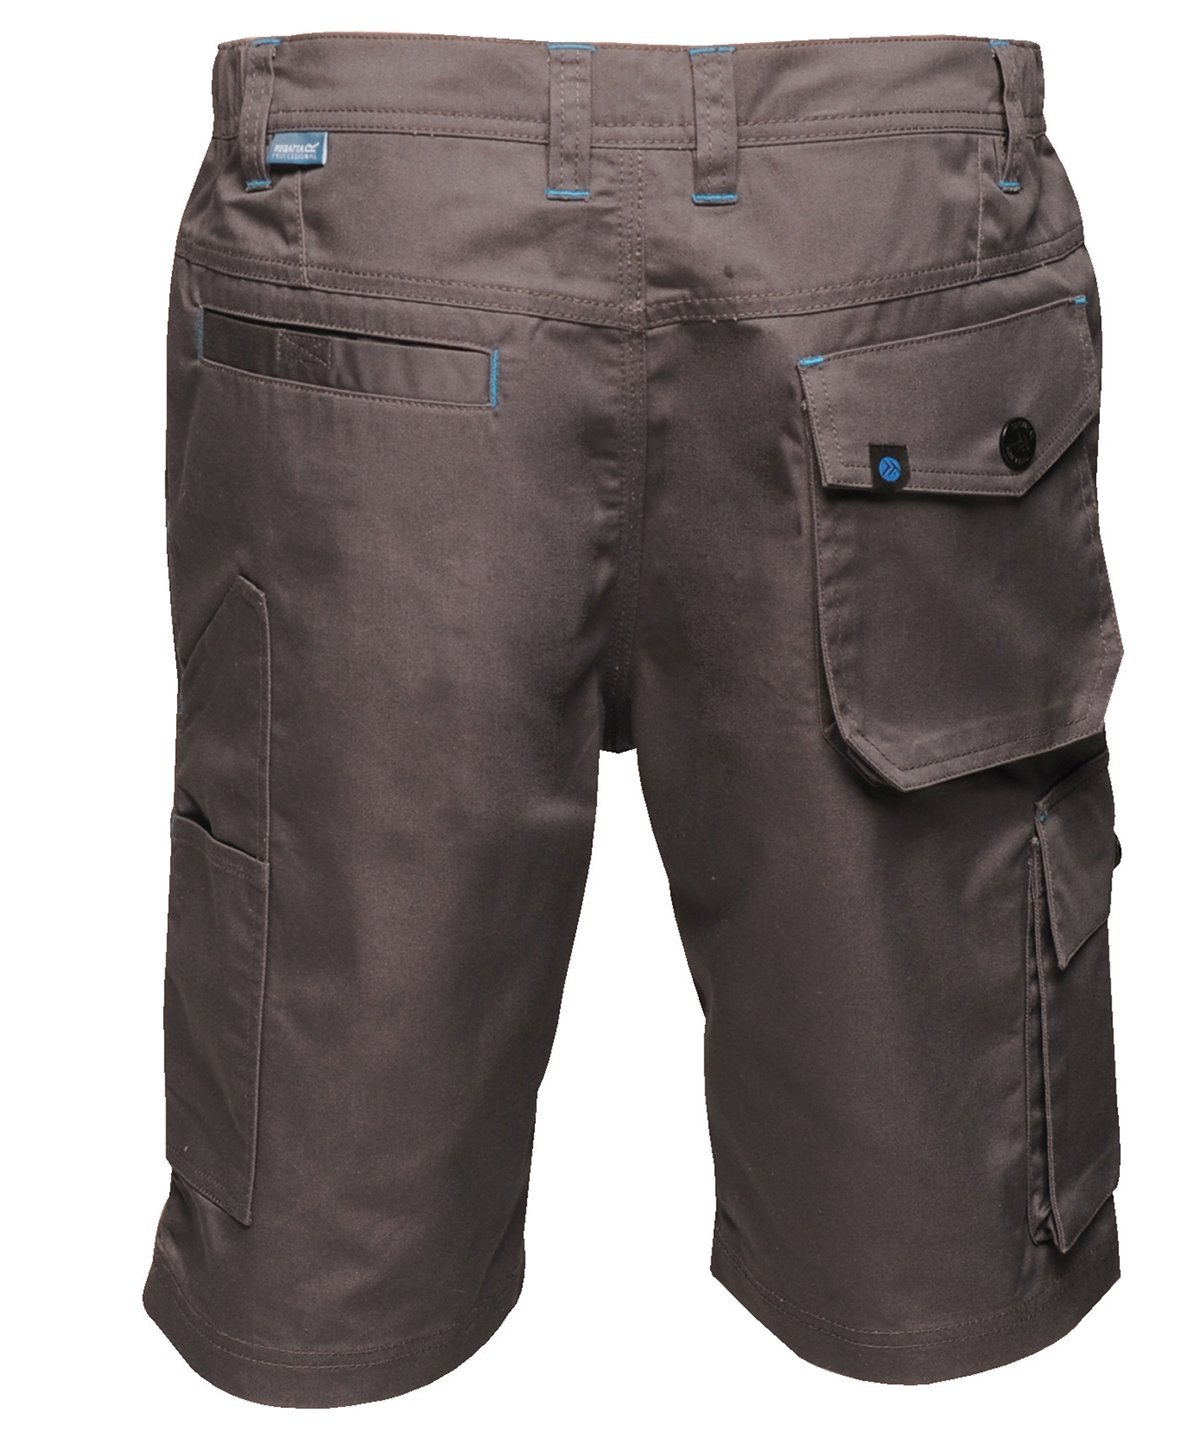 Heroic Cargo Shorts | Huk Group Nuneaton